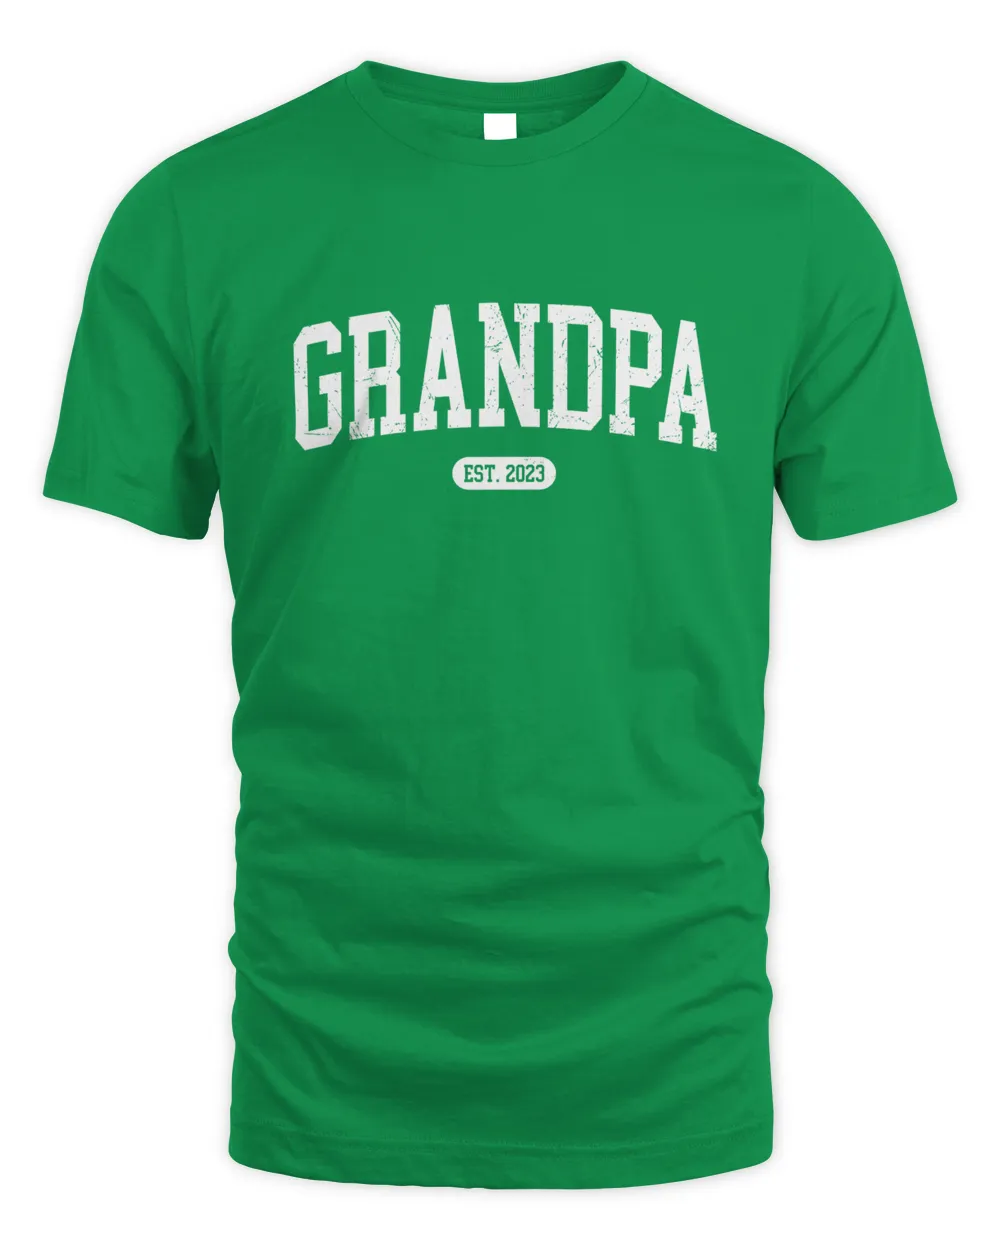 Retro Personalized Grandpa Tshirt, Fathers Day Gift, Cool Grandpa Shirt, Gift for Grandparents, Gift for Grandpa, New Grandpa Gift